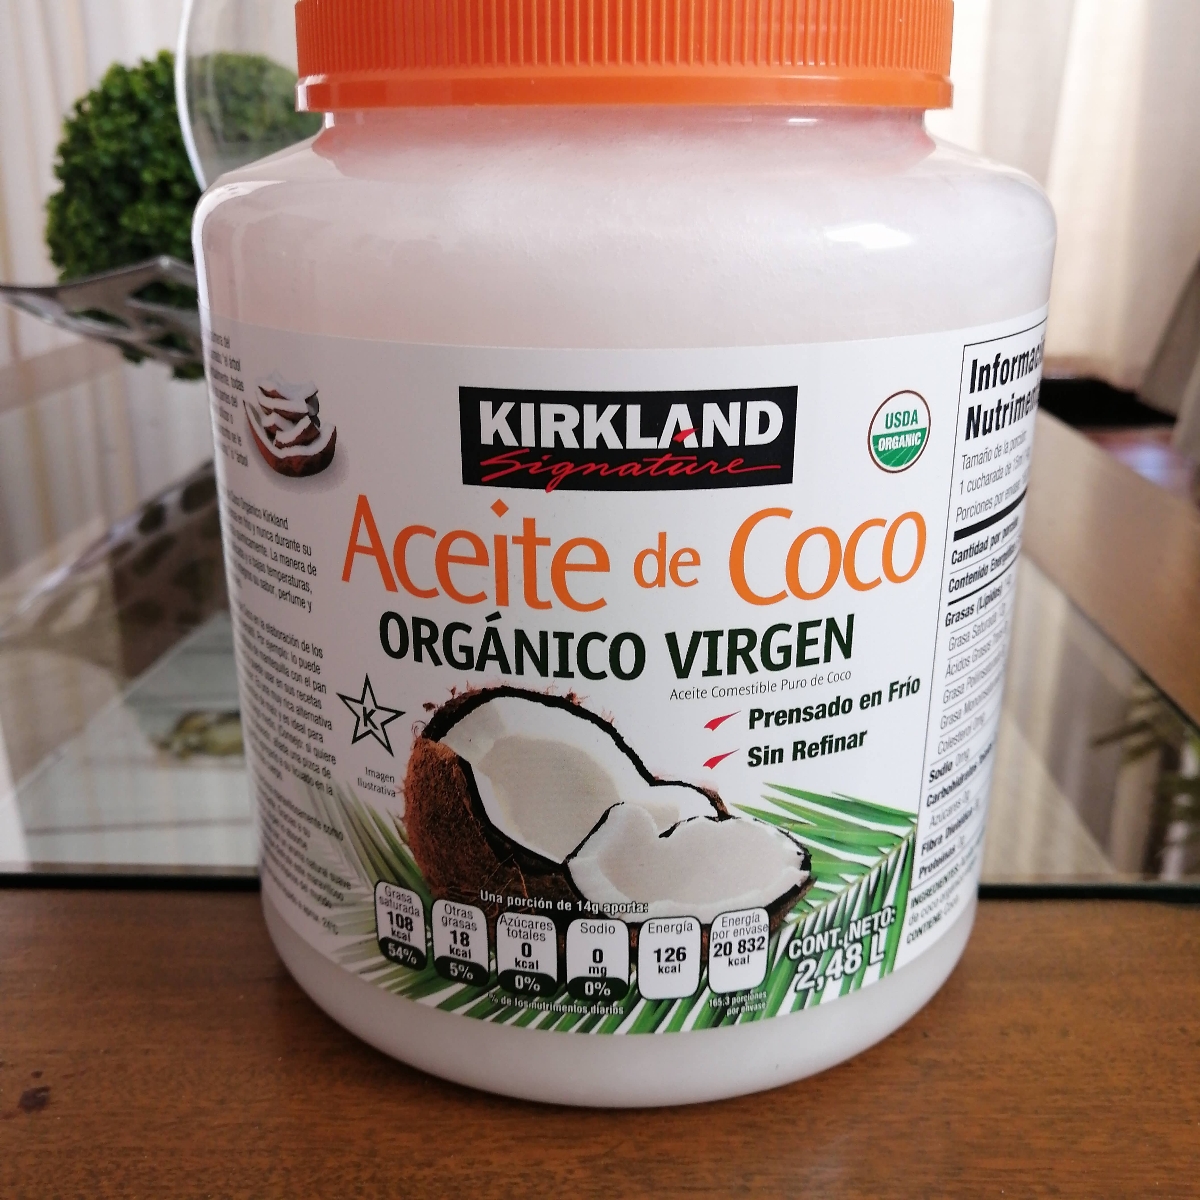 Kirkland Signature Aceite de Coco Organico Virgen Review | abillion